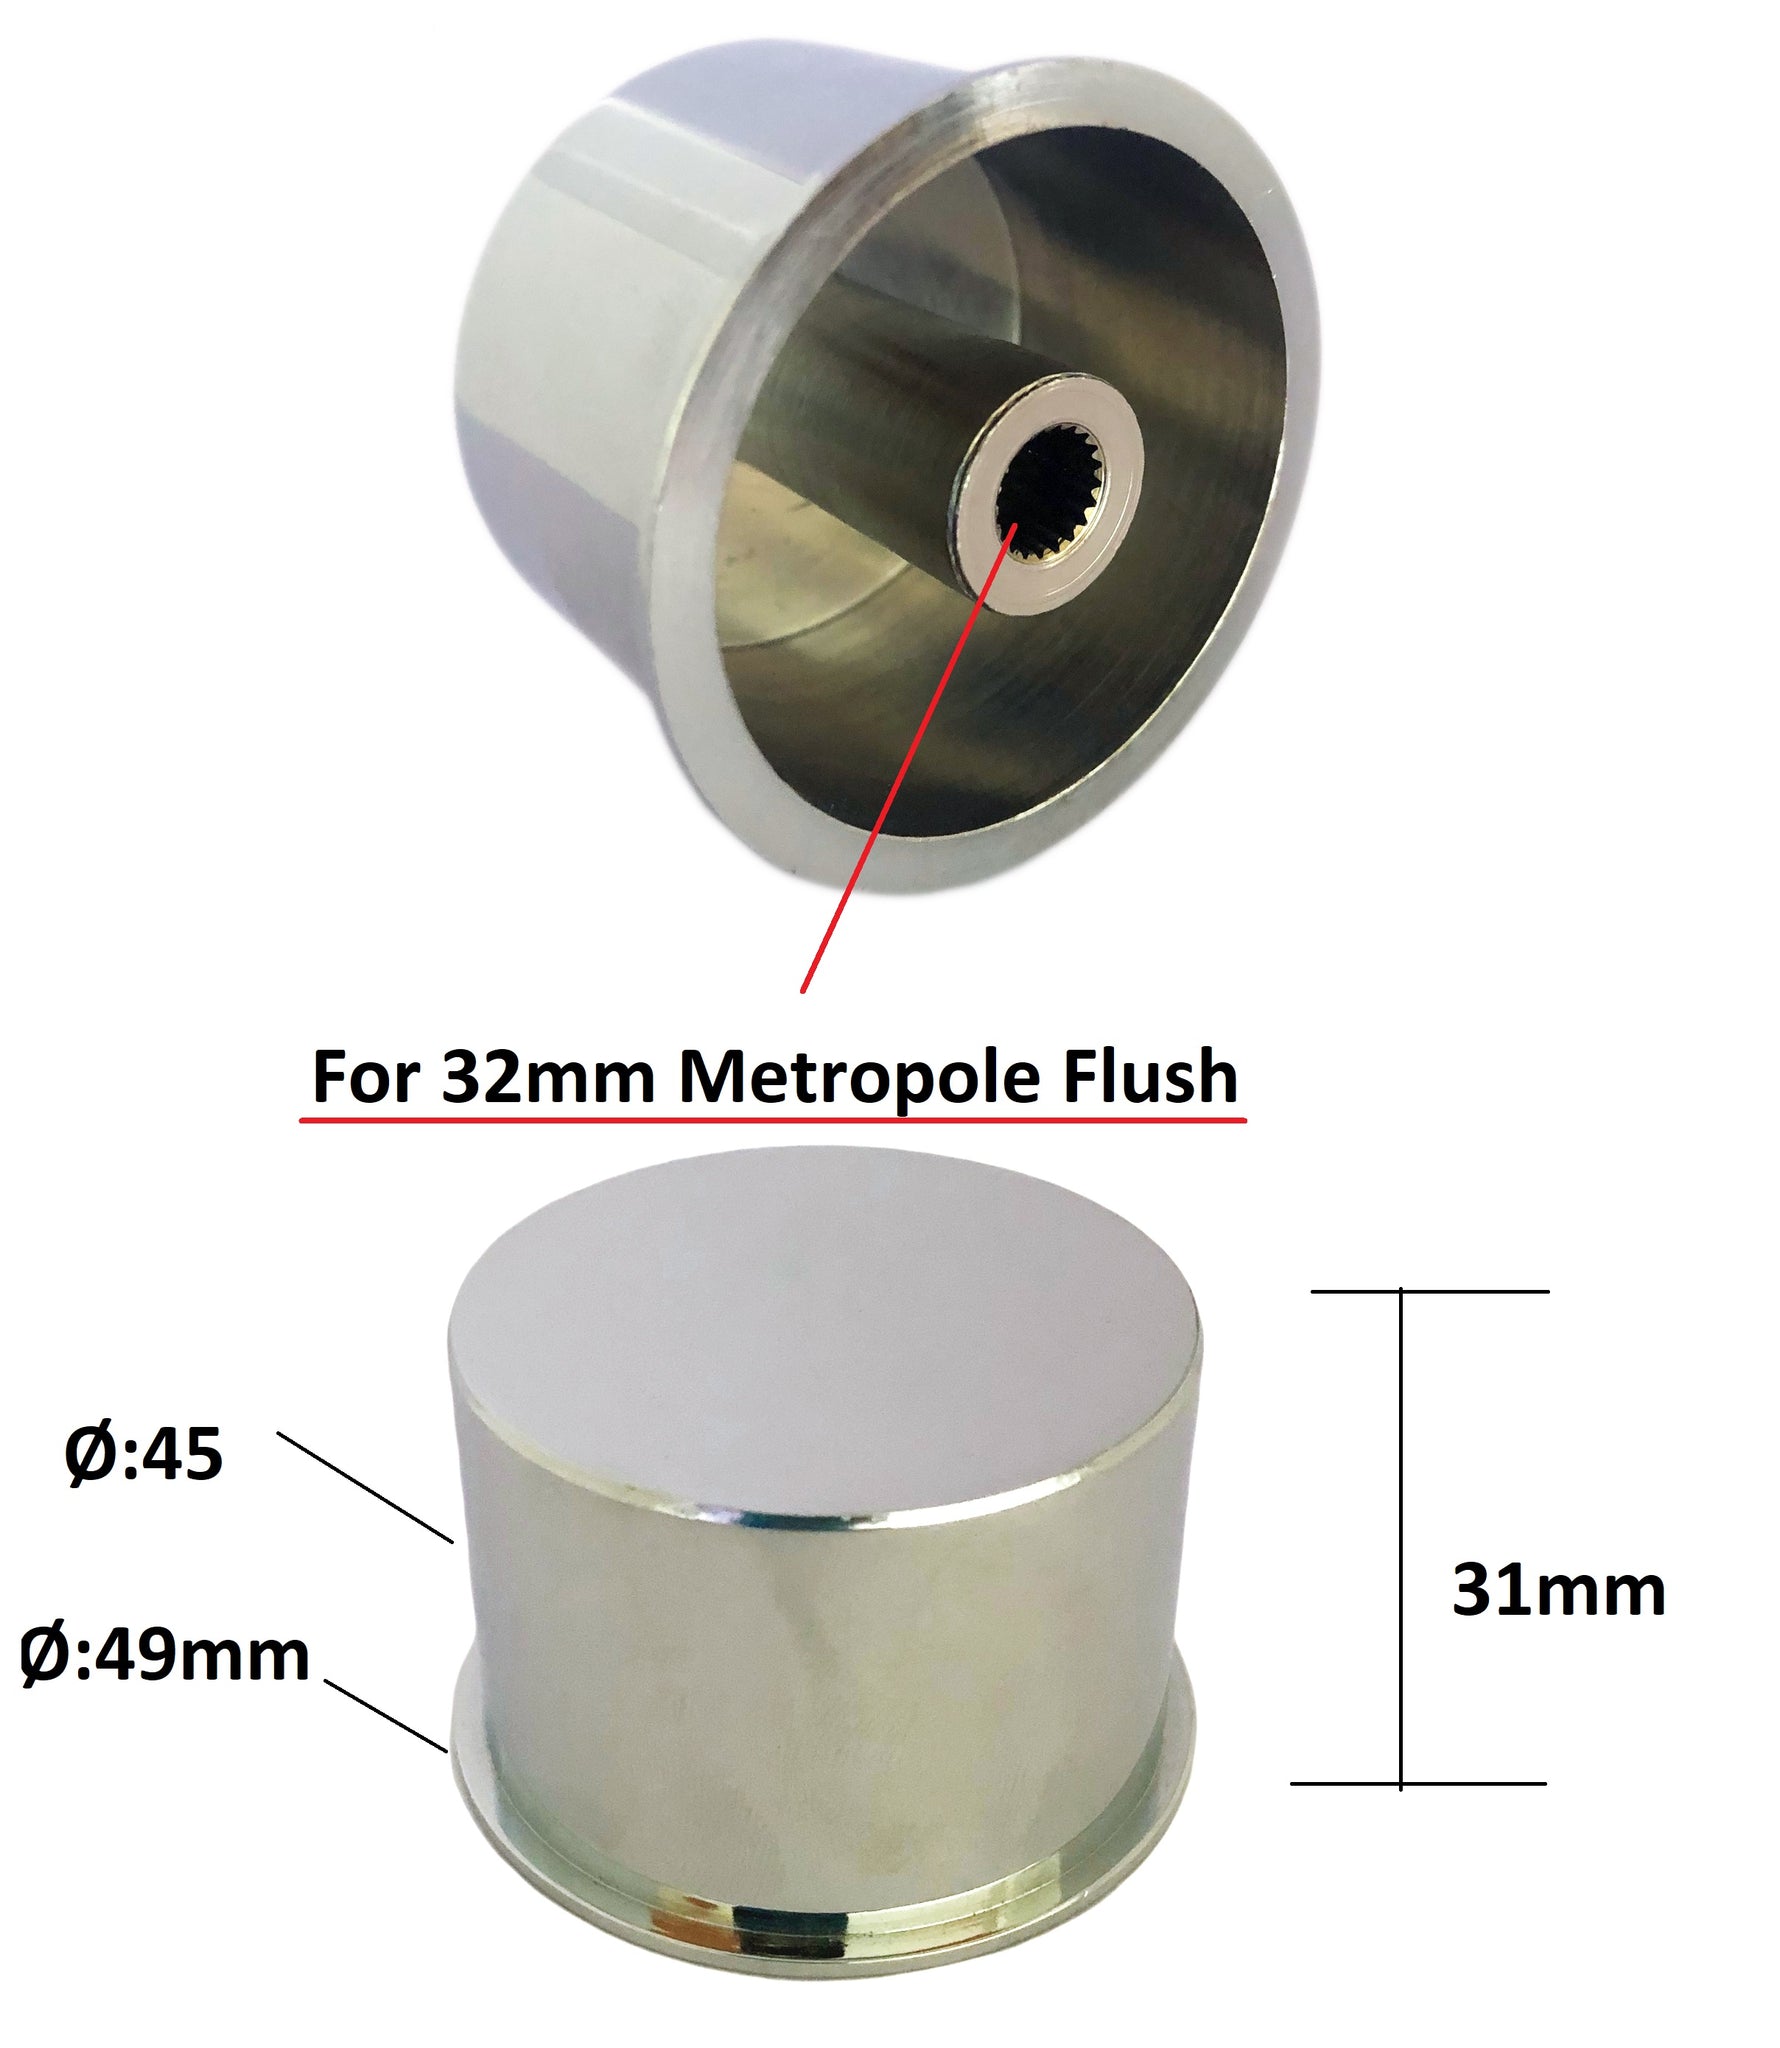 Impoda 32mm Jaquar Type Metropole Handle | Push Button/IMP-1034